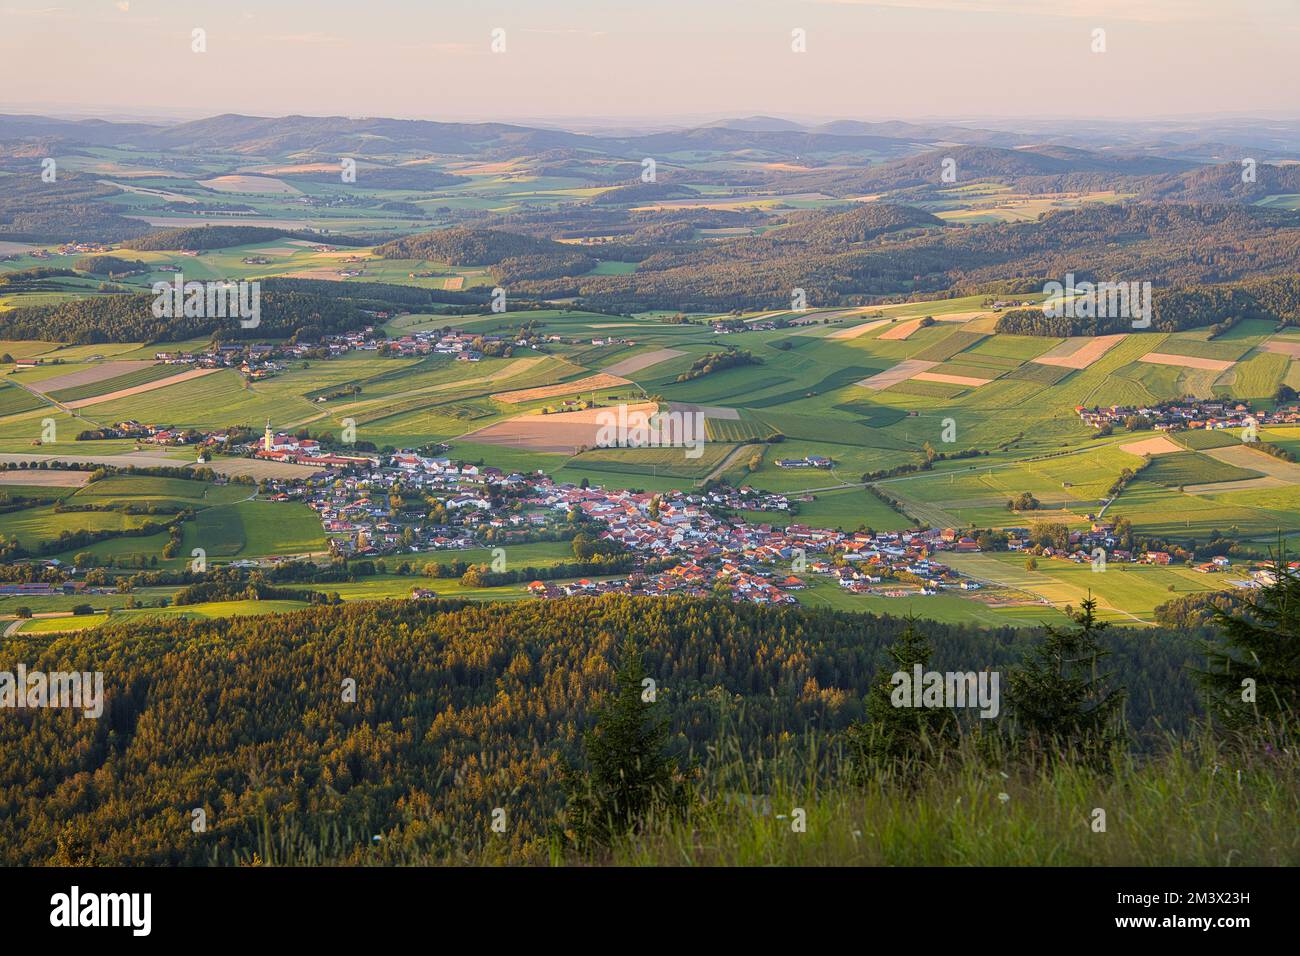 View from mount Hoher Bogen to Neukirchen beim Heiligen Blut, a small town in the Bavarian Forest. Lamer Winkel, district of Cham, Upper Palatinate, B Stock Photo